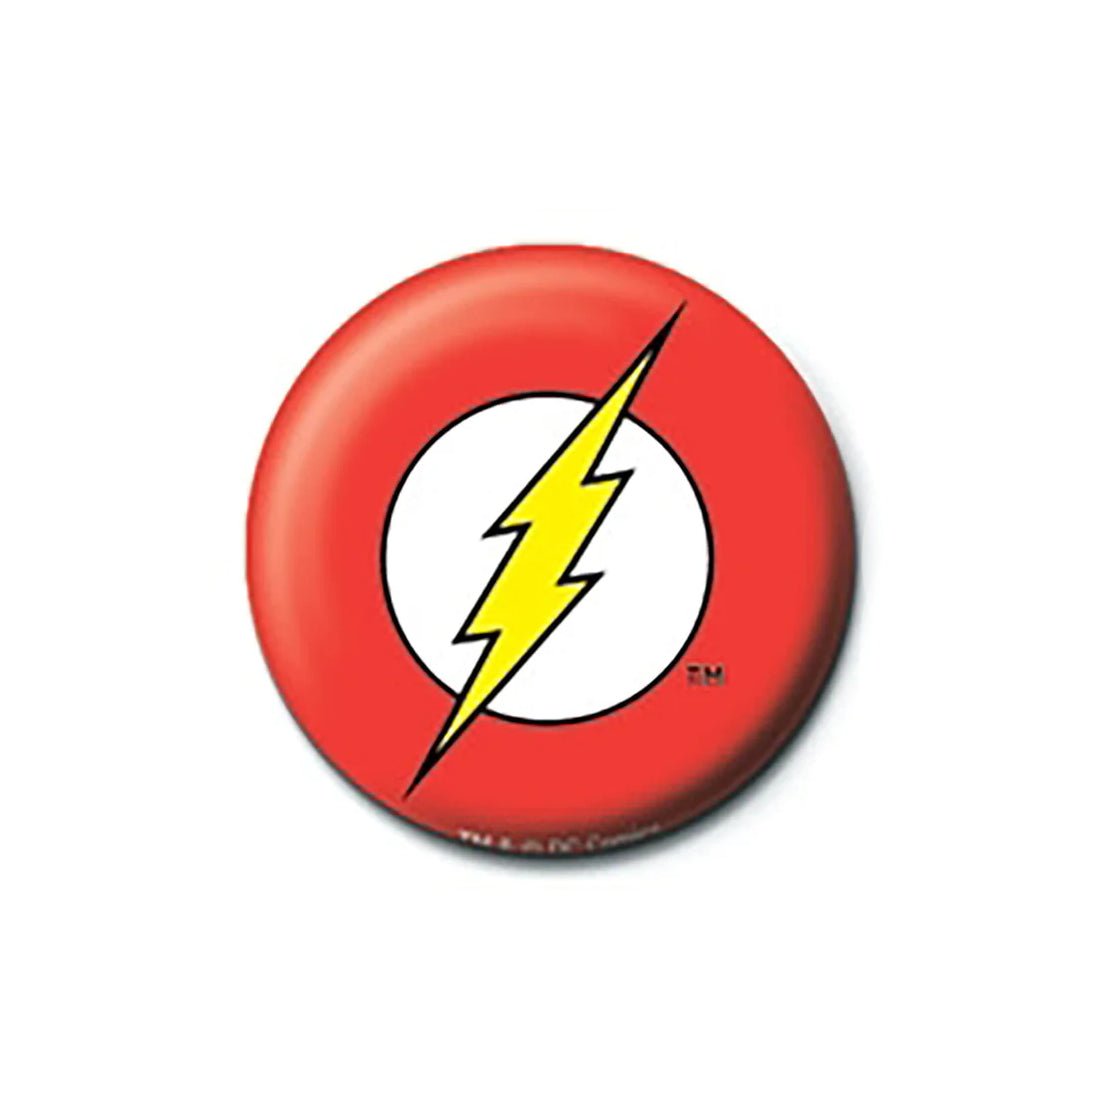 Dc Comics - The Flash Logo Button Badge - أكسسوار - Store 974 | ستور ٩٧٤